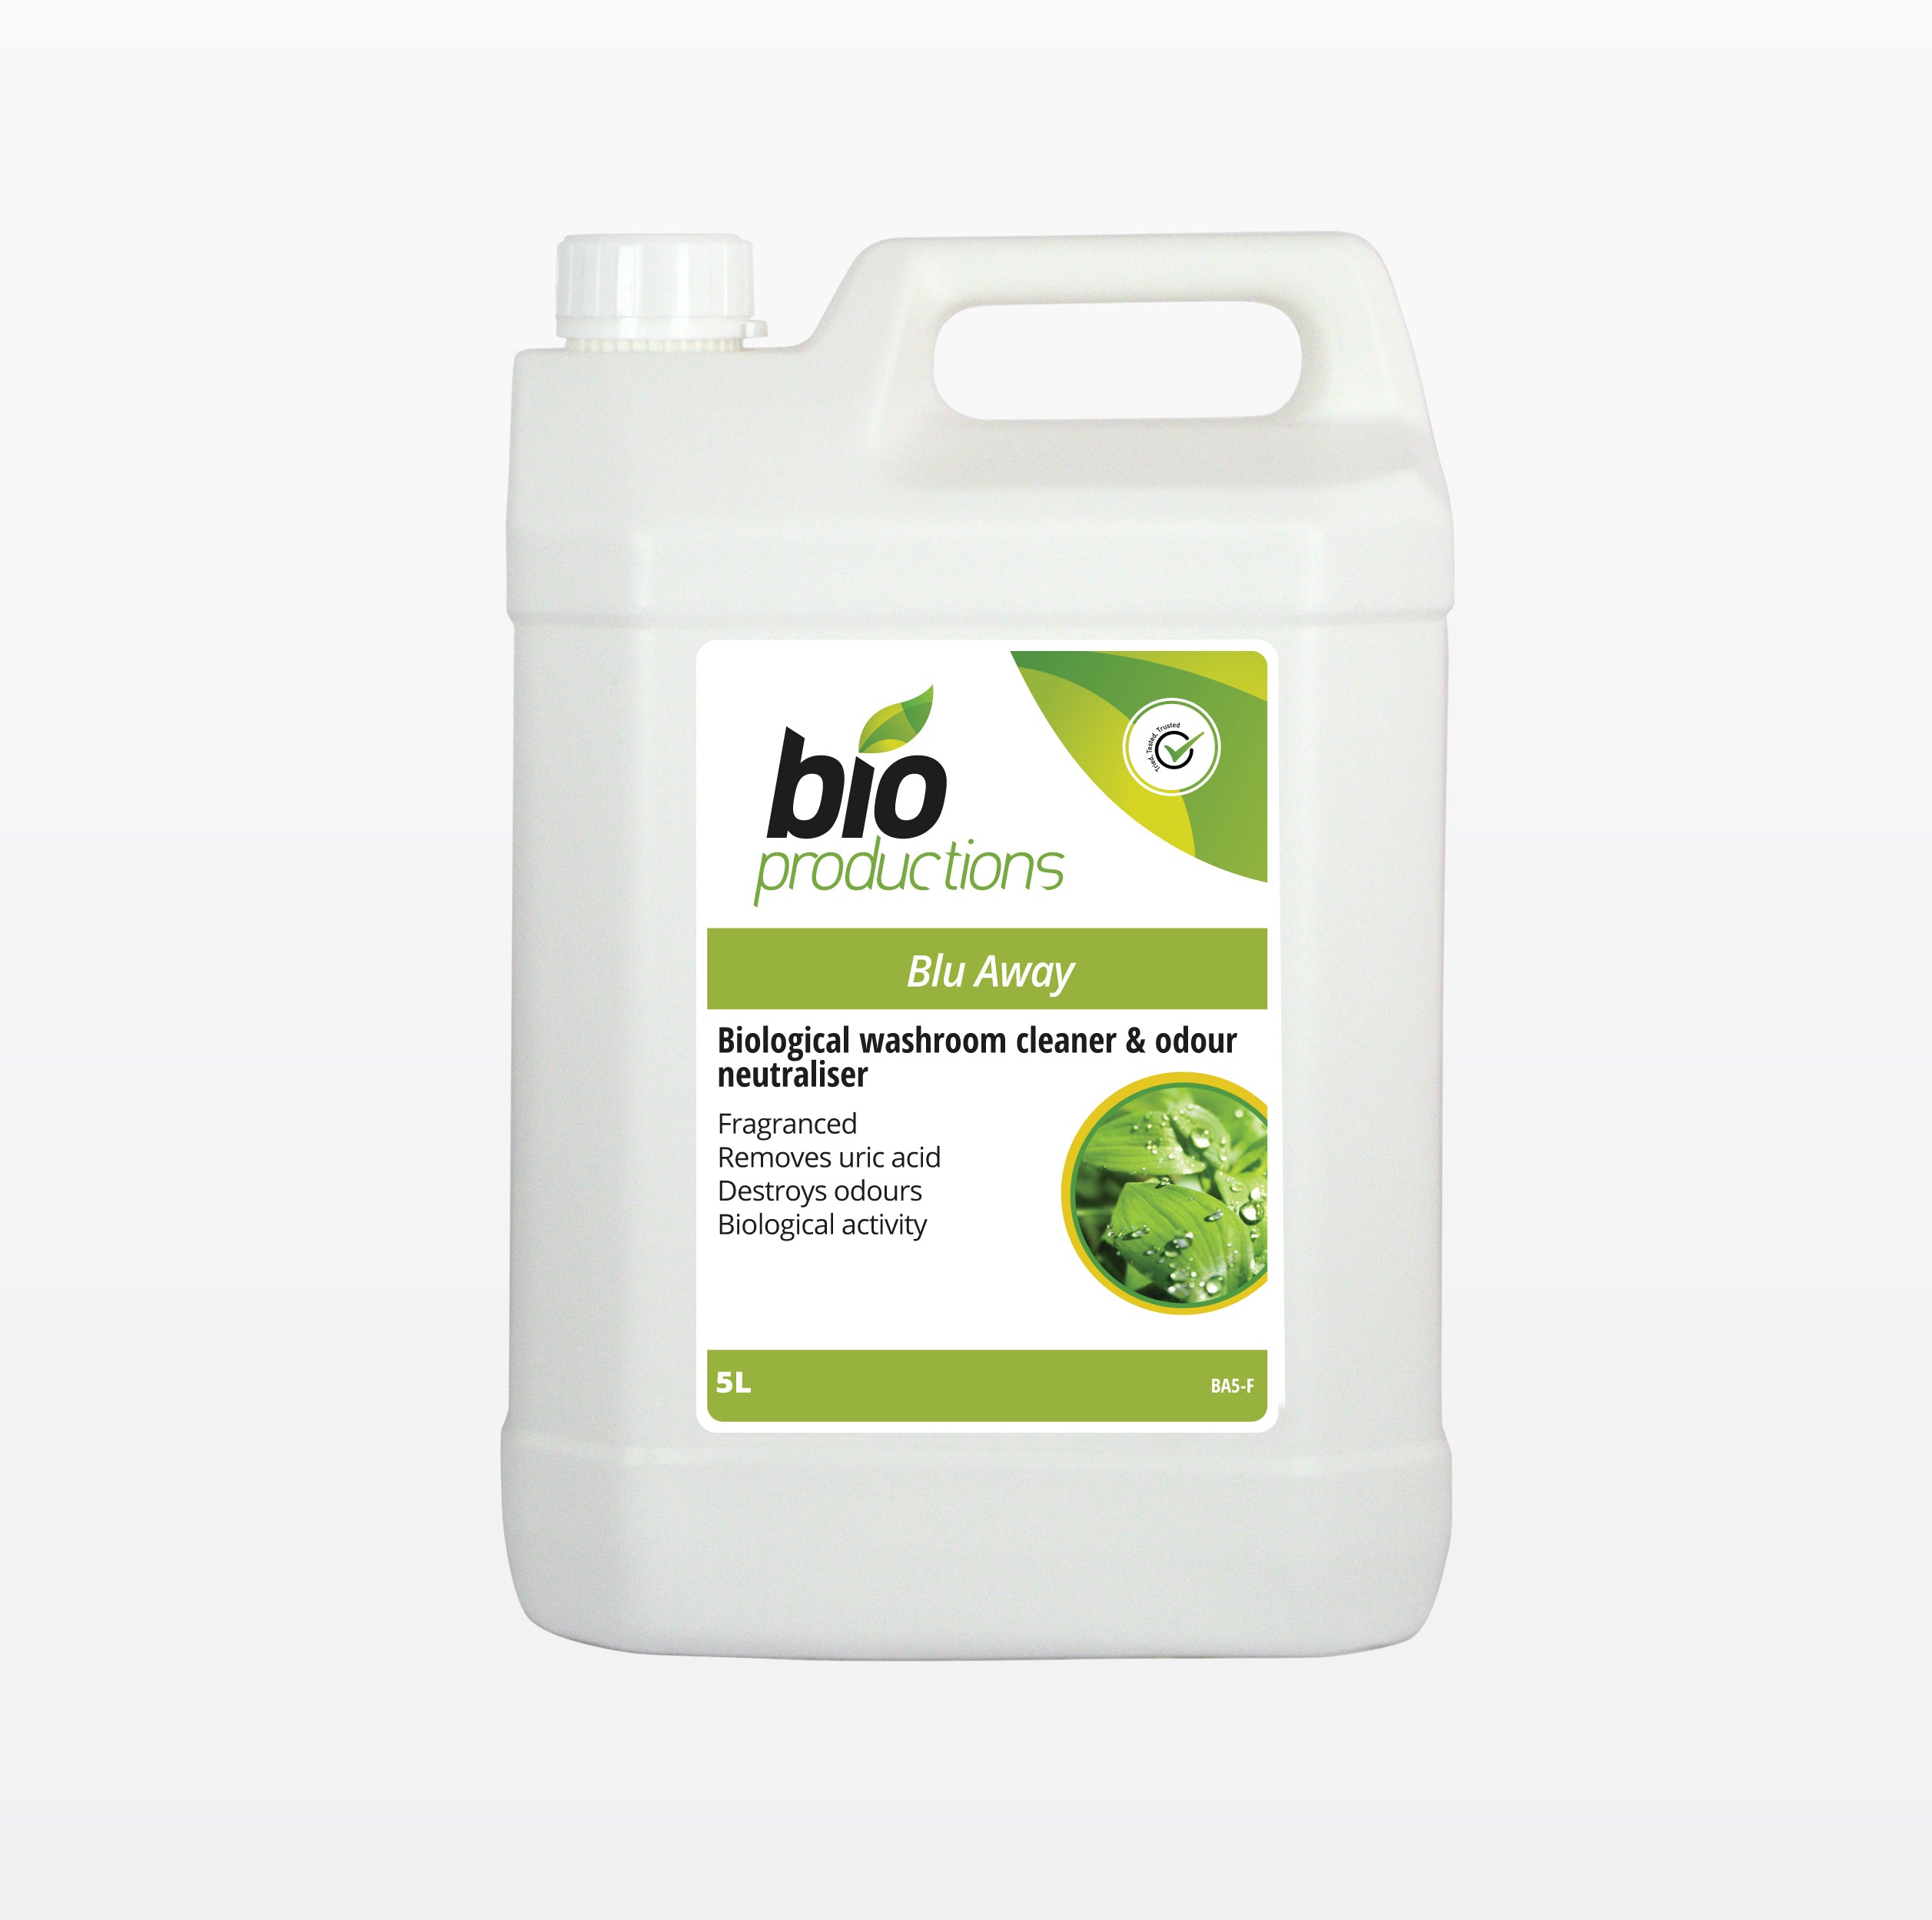 Bio Productions Blu Away Biological Washroom Cleaner BA5 5 Ltr